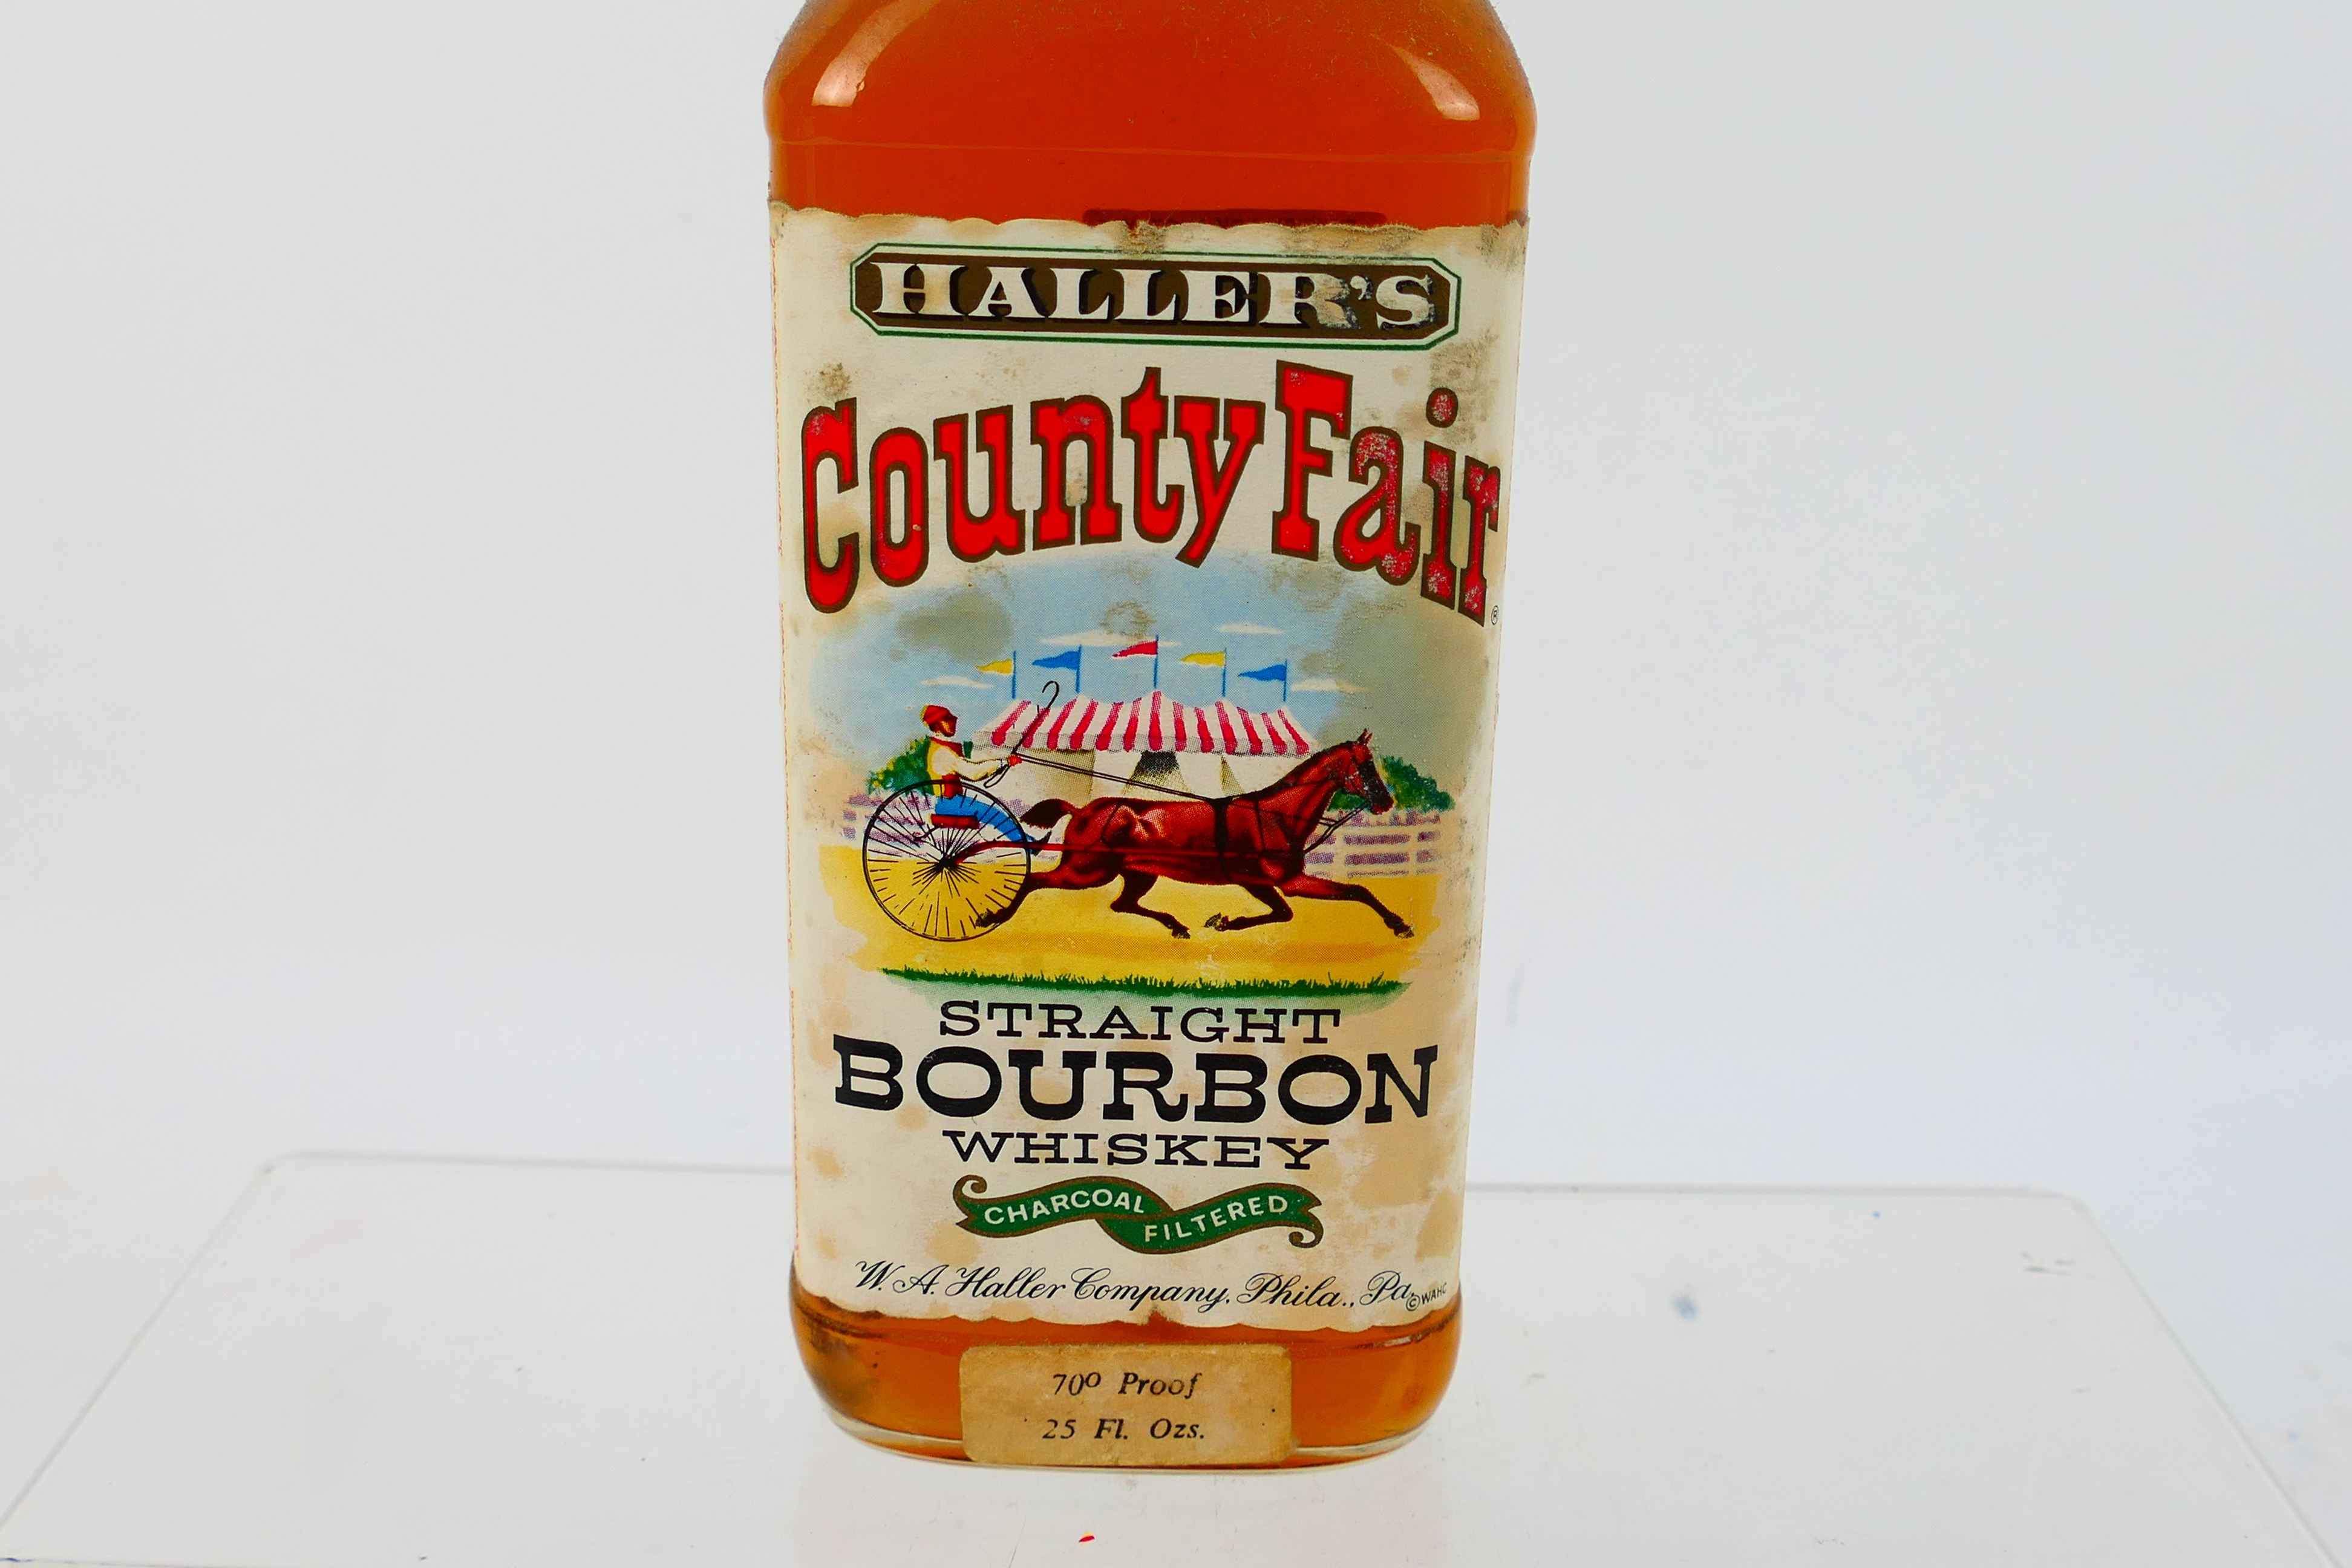 Bourbon - A 25 fl ozs bottle of Haller's County Fair Straight Bourbon Whiskey, 70° Proof, - Image 3 of 9